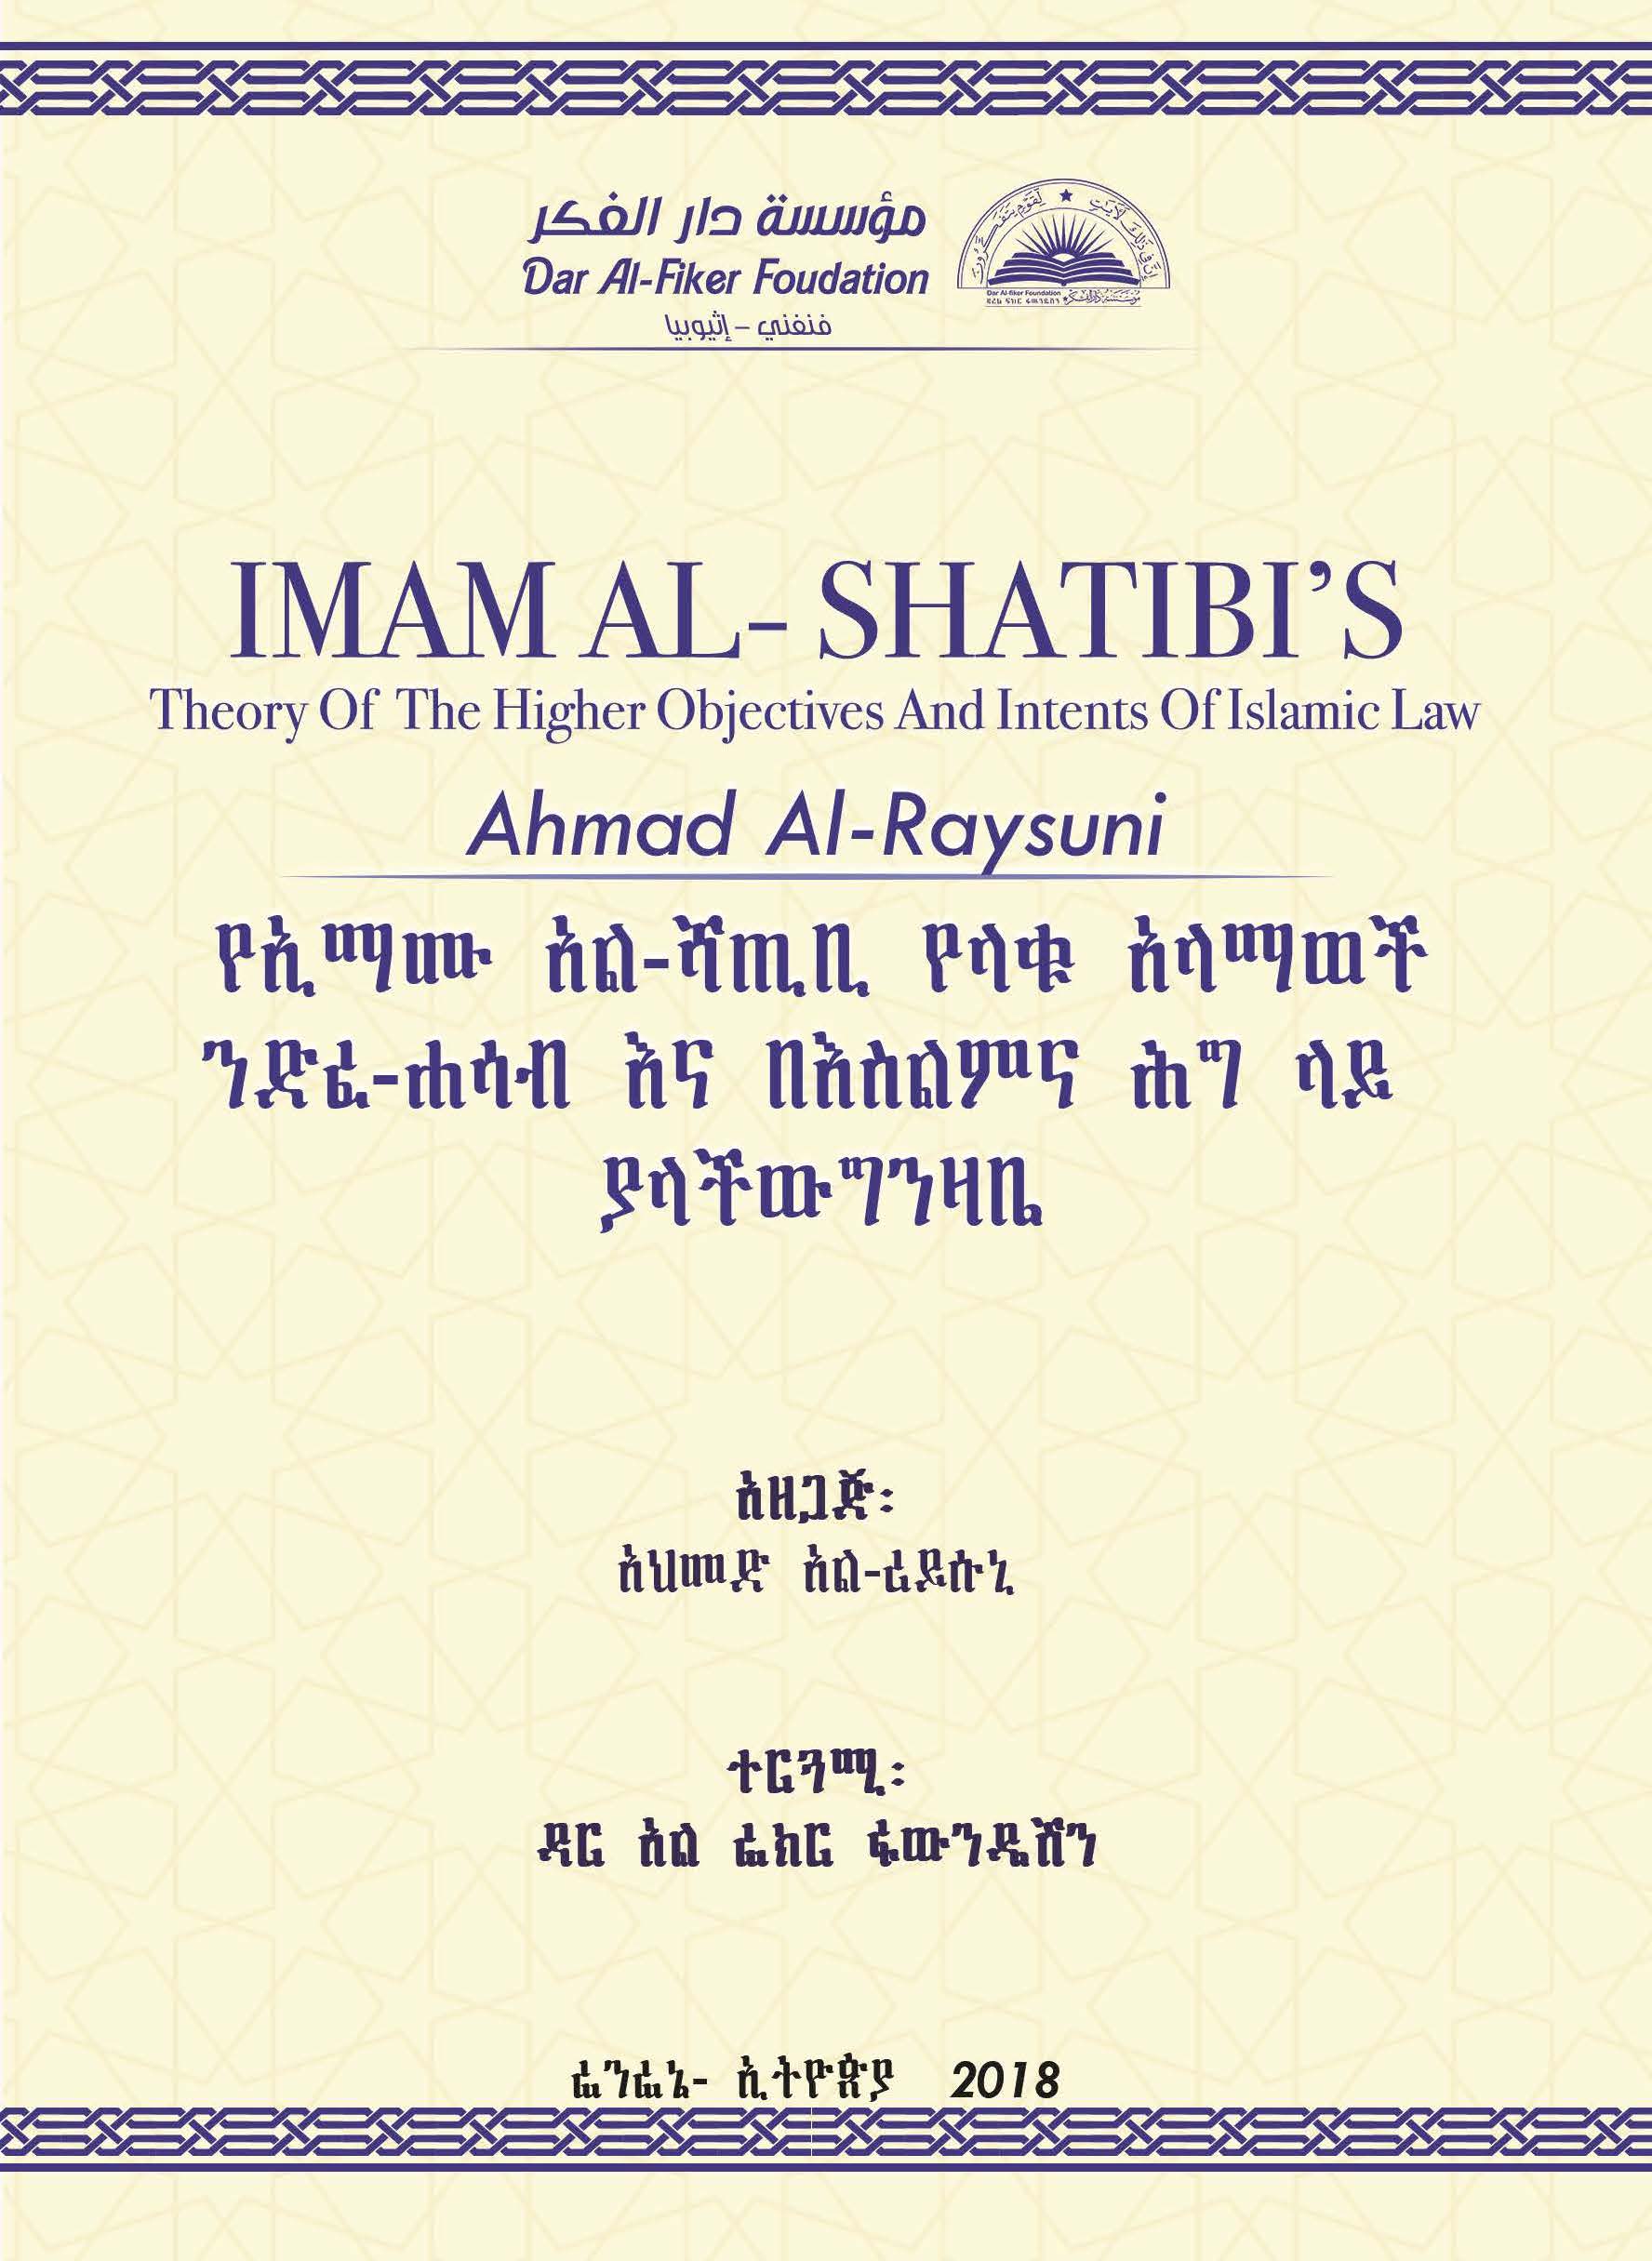 Amharic: የኢማሙ አል- ሻጢቢ የላቁ አላማወች ንድፈ-ሐሳብ እና በእስልምና ሕግ ላይ ያላችው ግንዛቤ (Imam Al-Shatibi’s Theory of the Higher Objectives and Intents of Islamic Law)